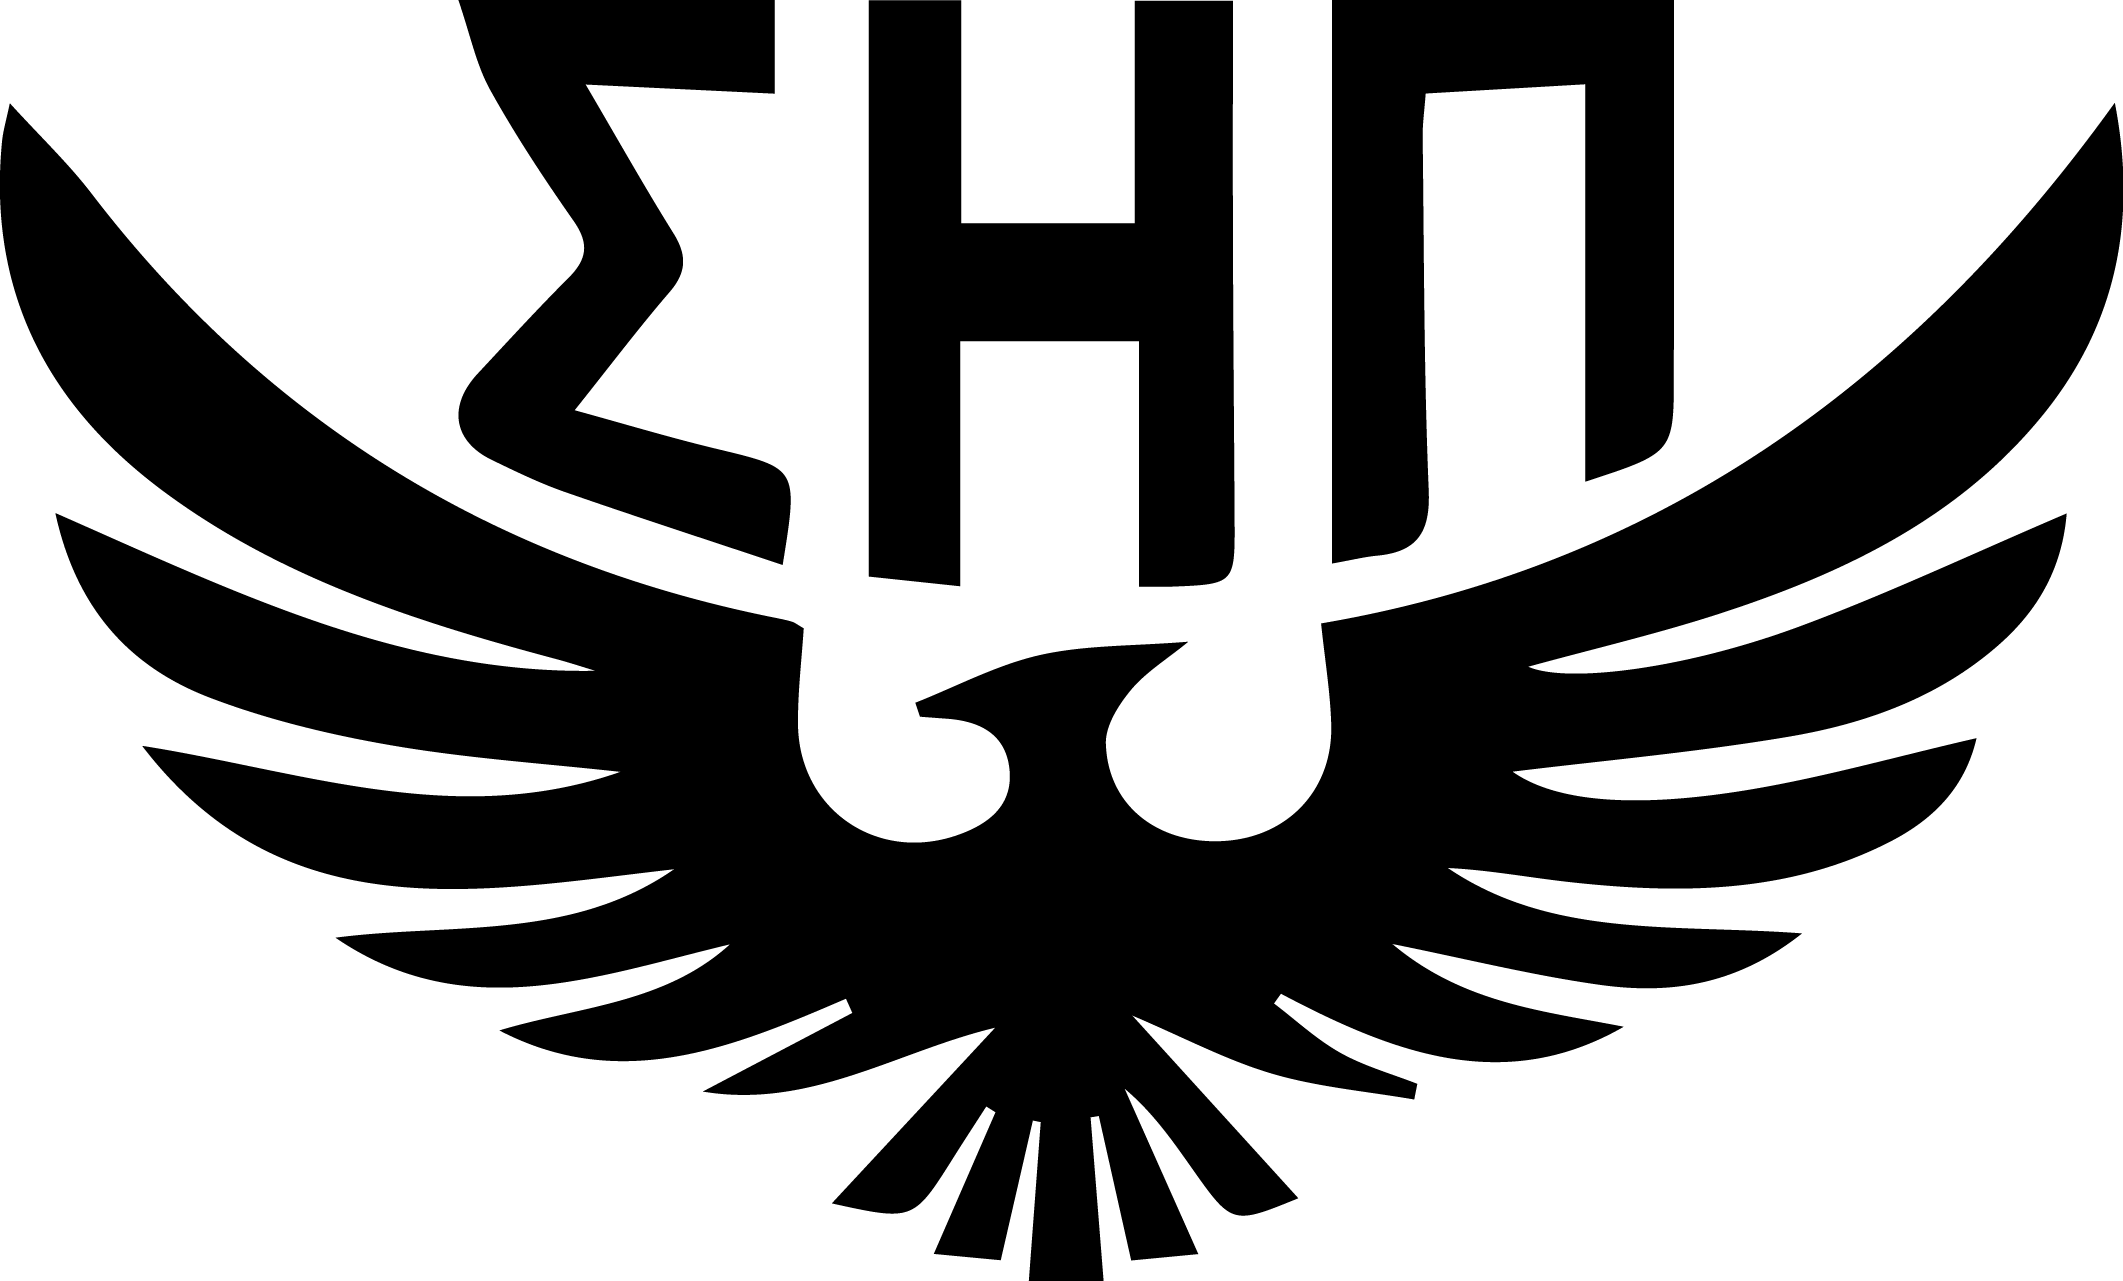 Sigma Eta Pi logo